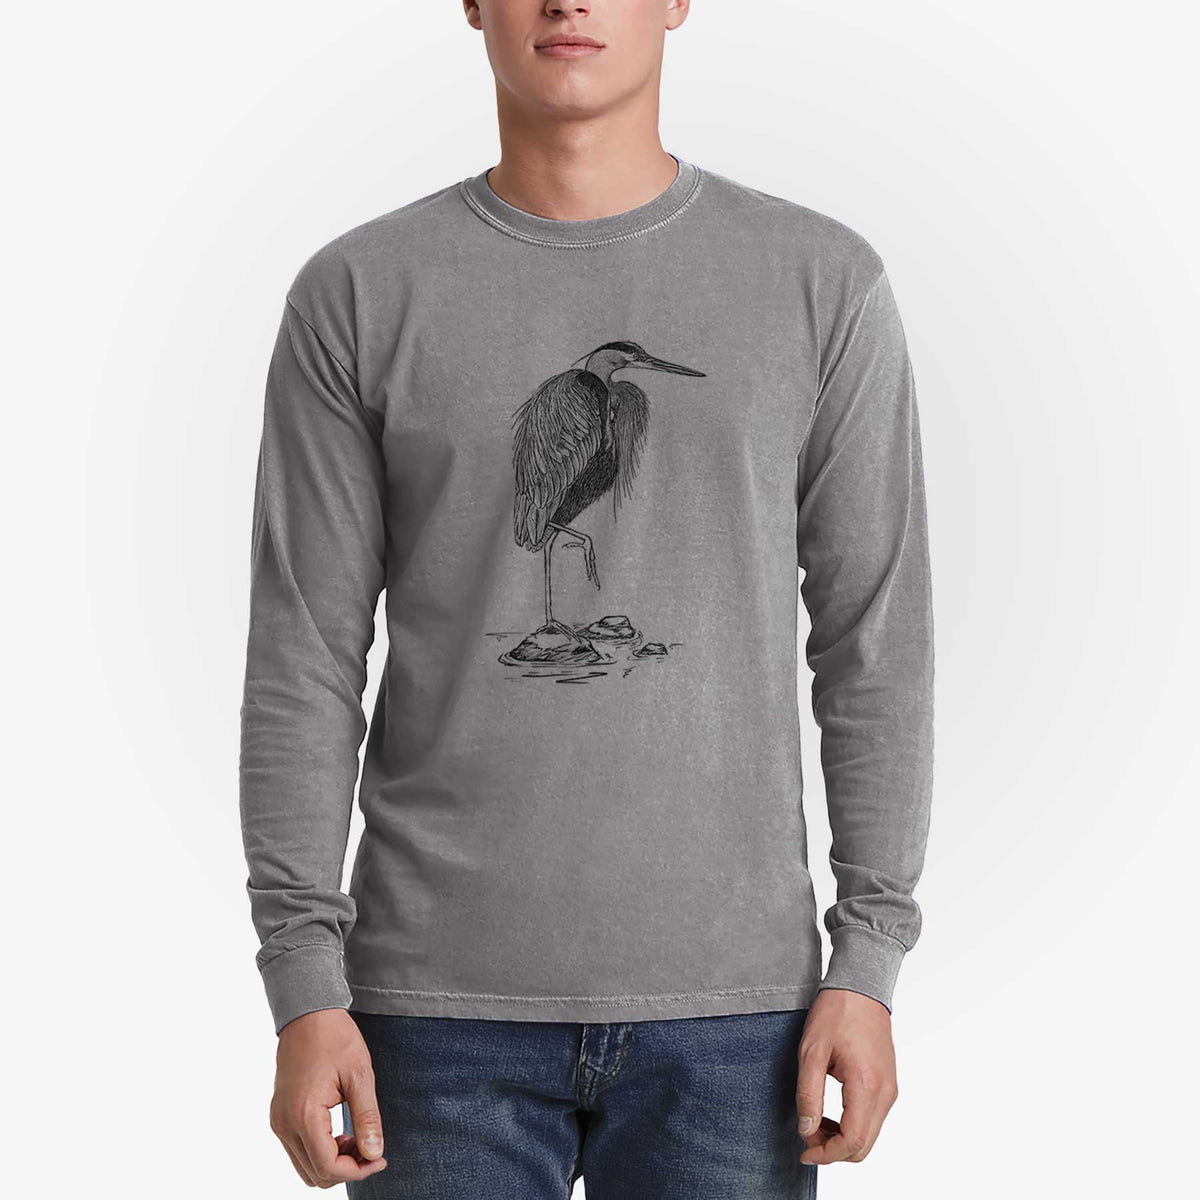 Ardea herodias - Great Blue Heron - Heavyweight 100% Cotton Long Sleeve